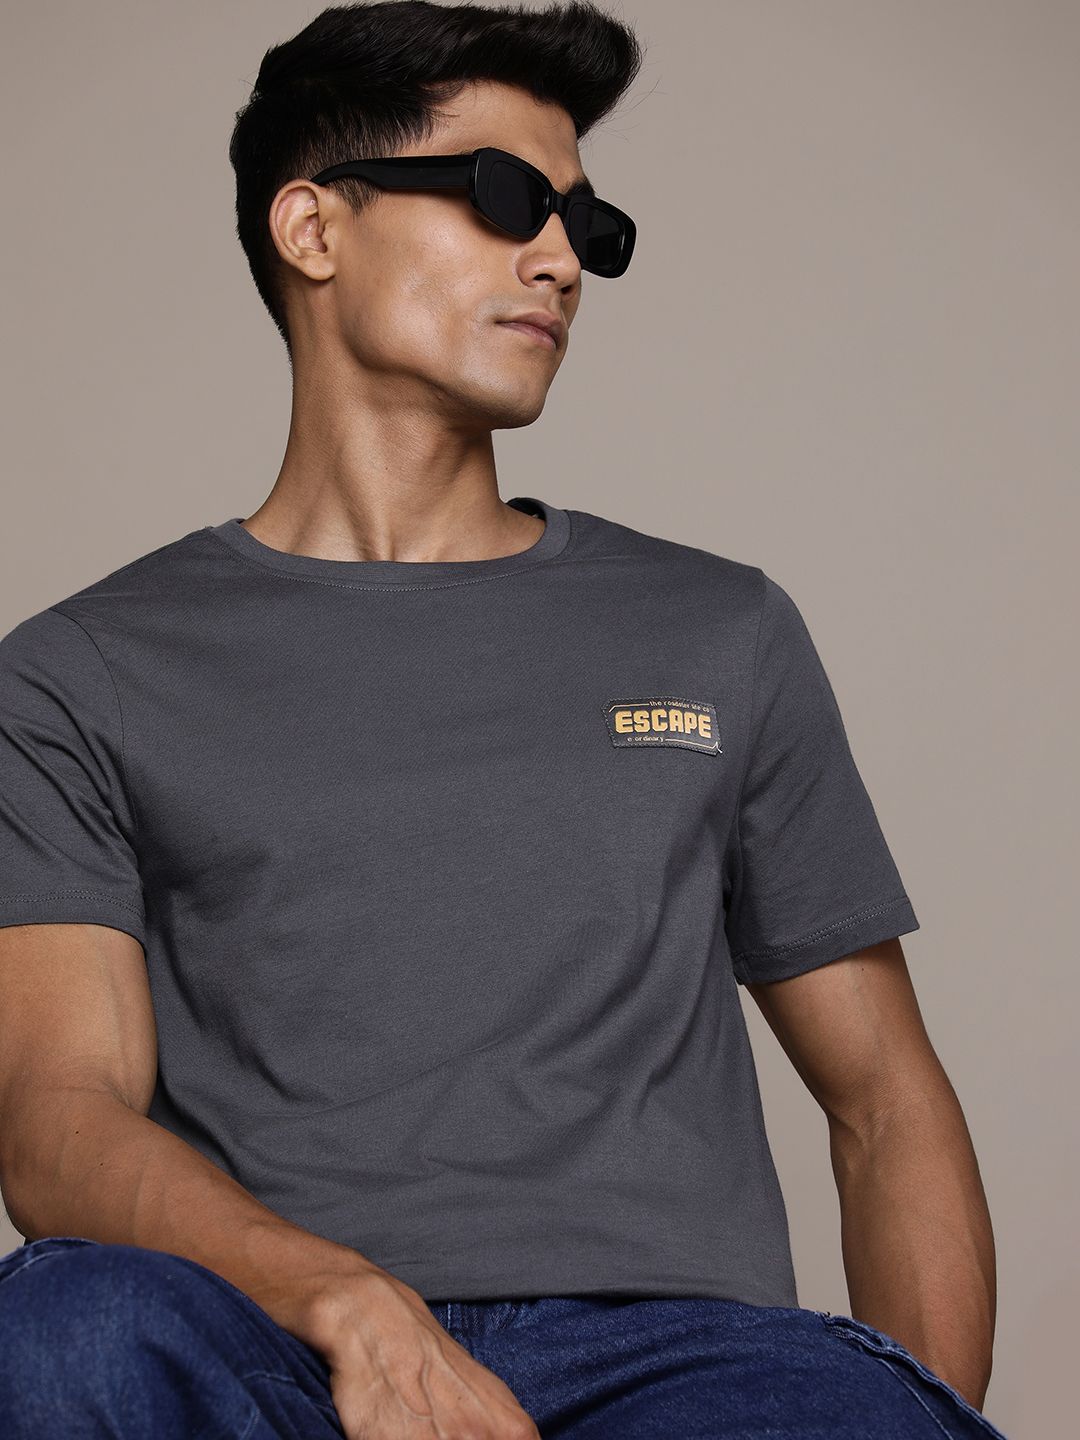 The Roadster Lifestyle Co. Men Pure Cotton T-shirt